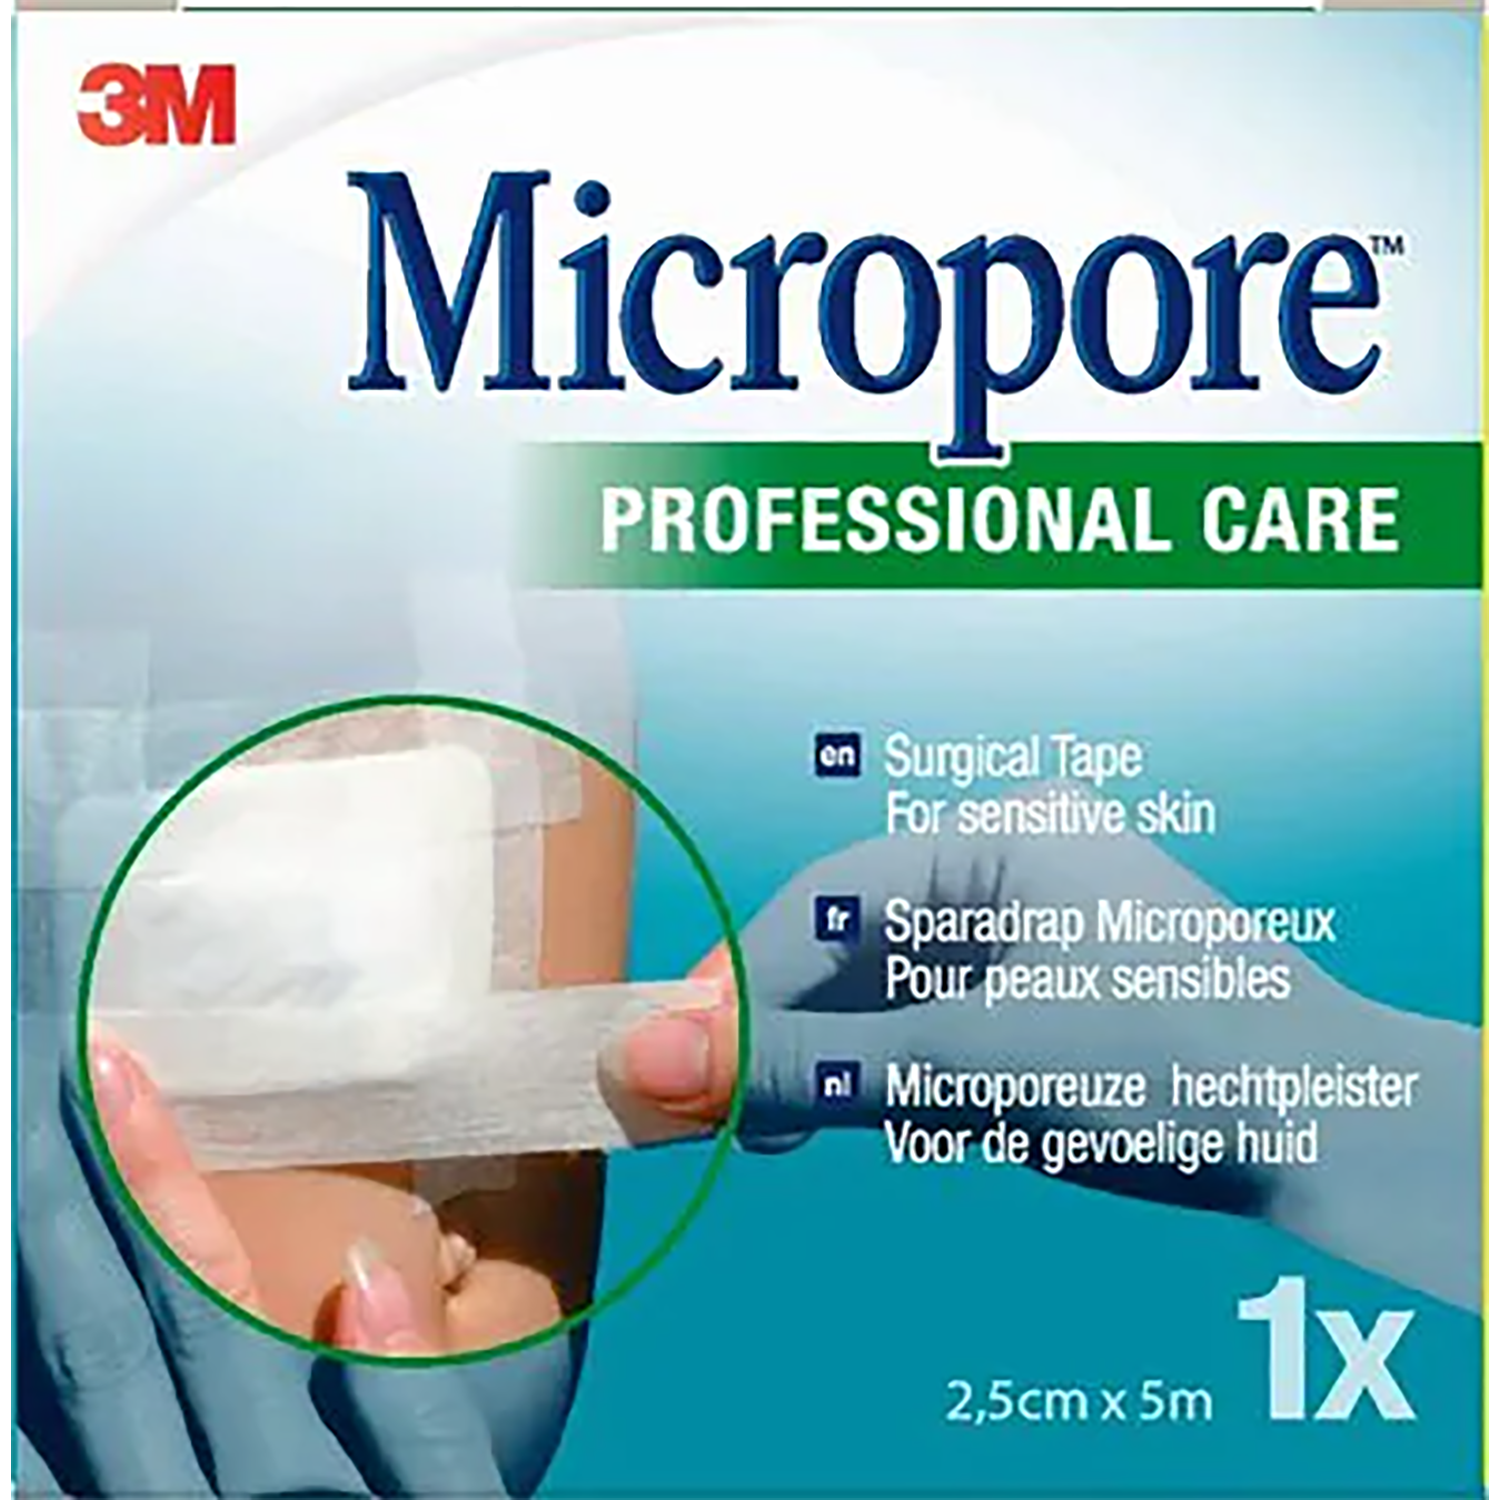 Micropore Surgical Tape | 2.5cm x 5m | Single